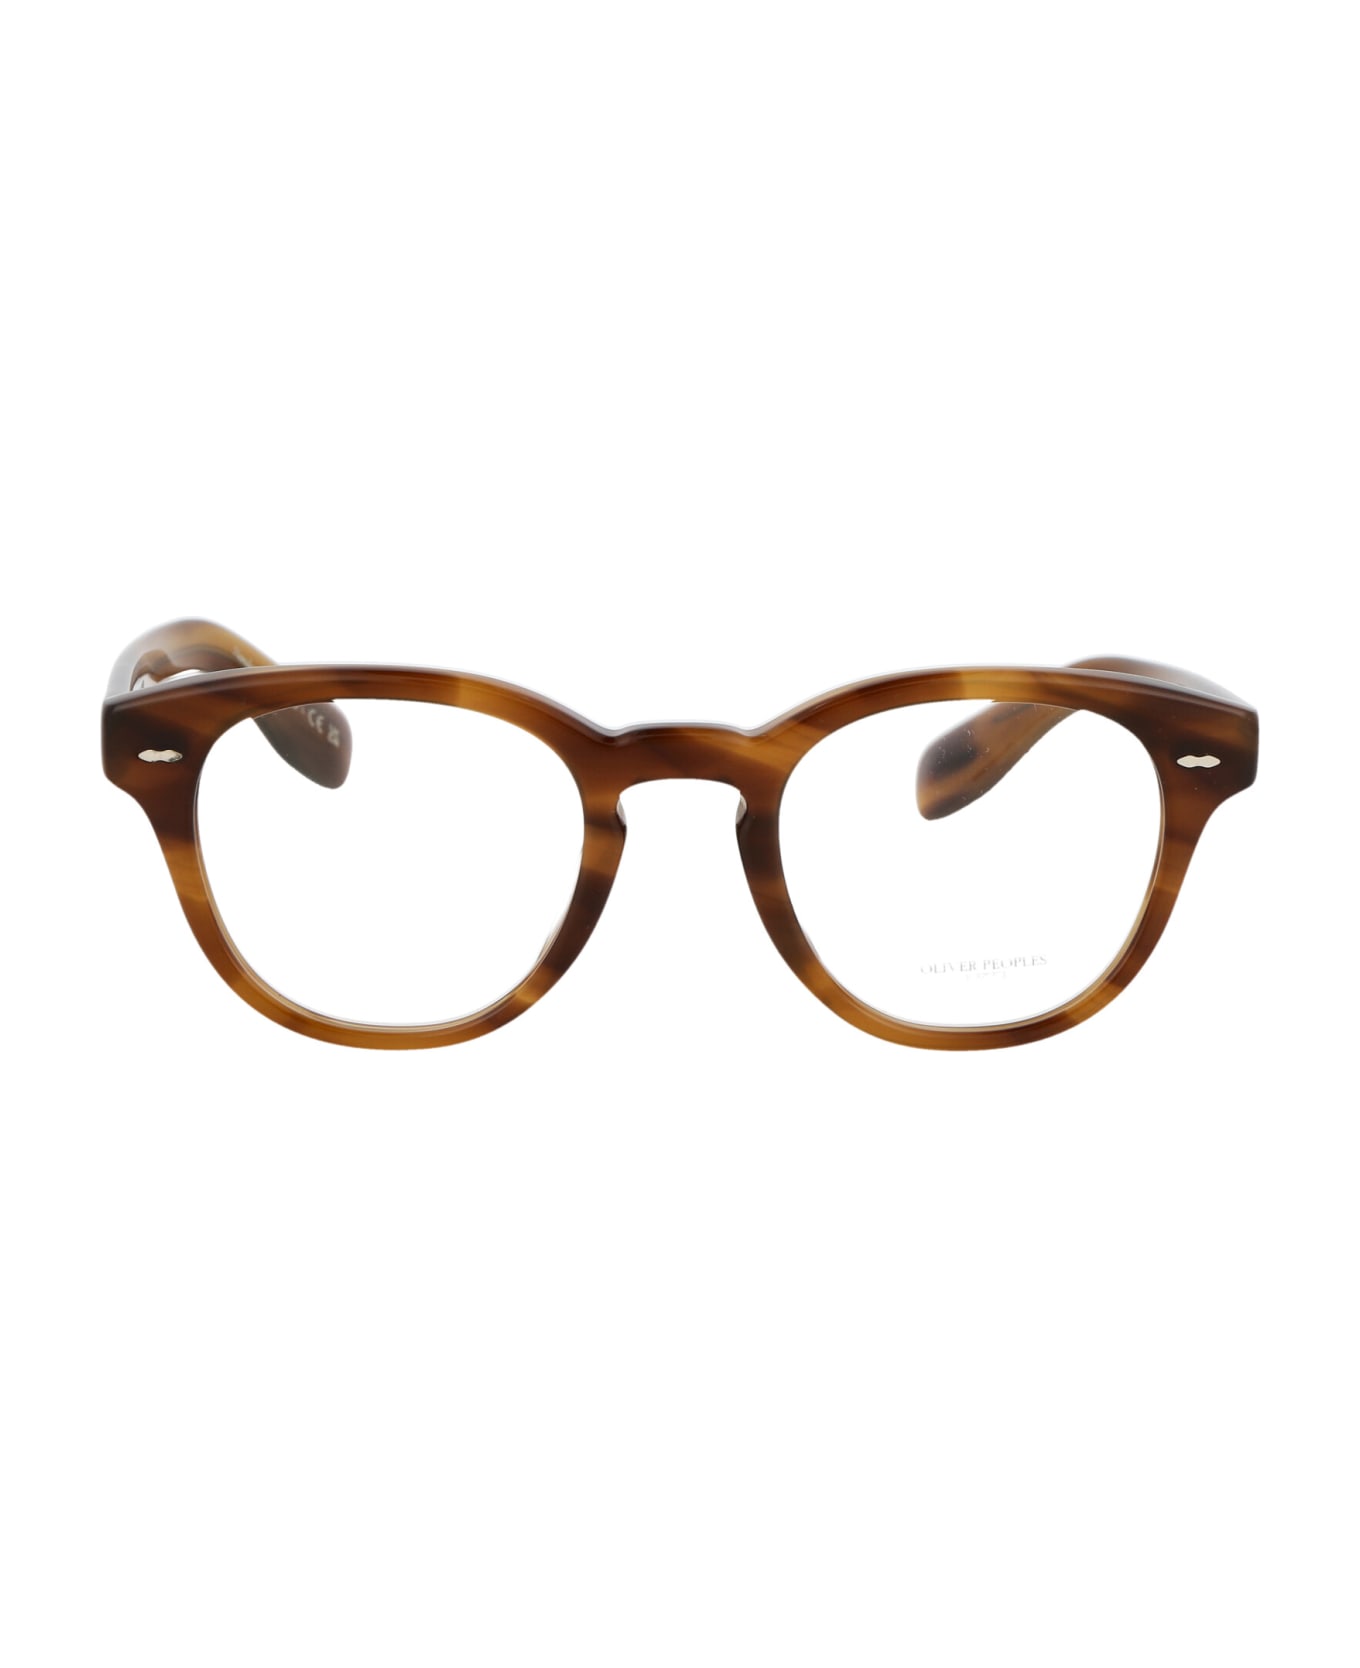 Oliver Peoples Cary Grant Glasses - 1011 RAINTREE アイウェア